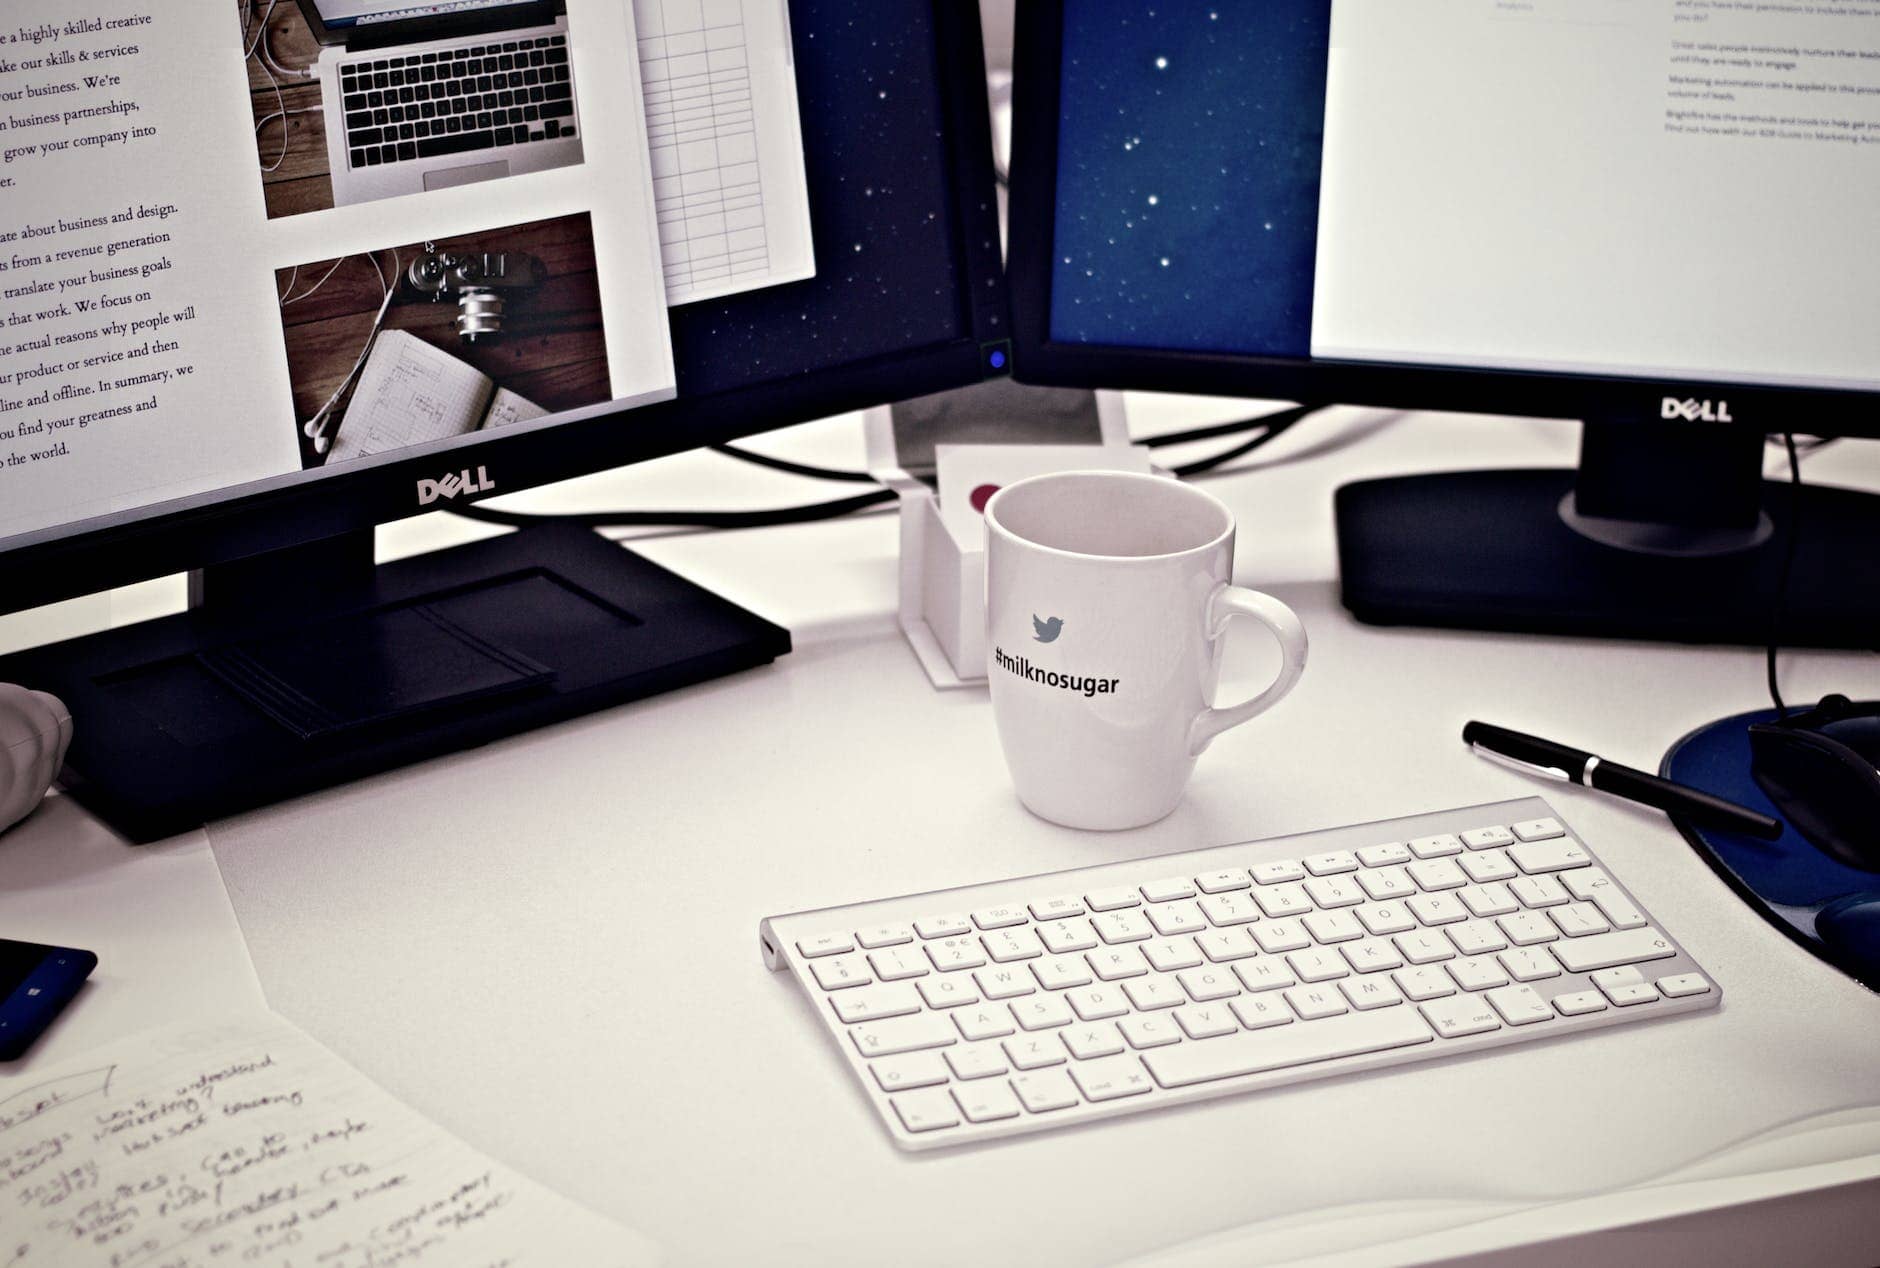 white ceramic mug between apple magic keyboard and two flat screen computer monitors- lifestyle blog post ideas